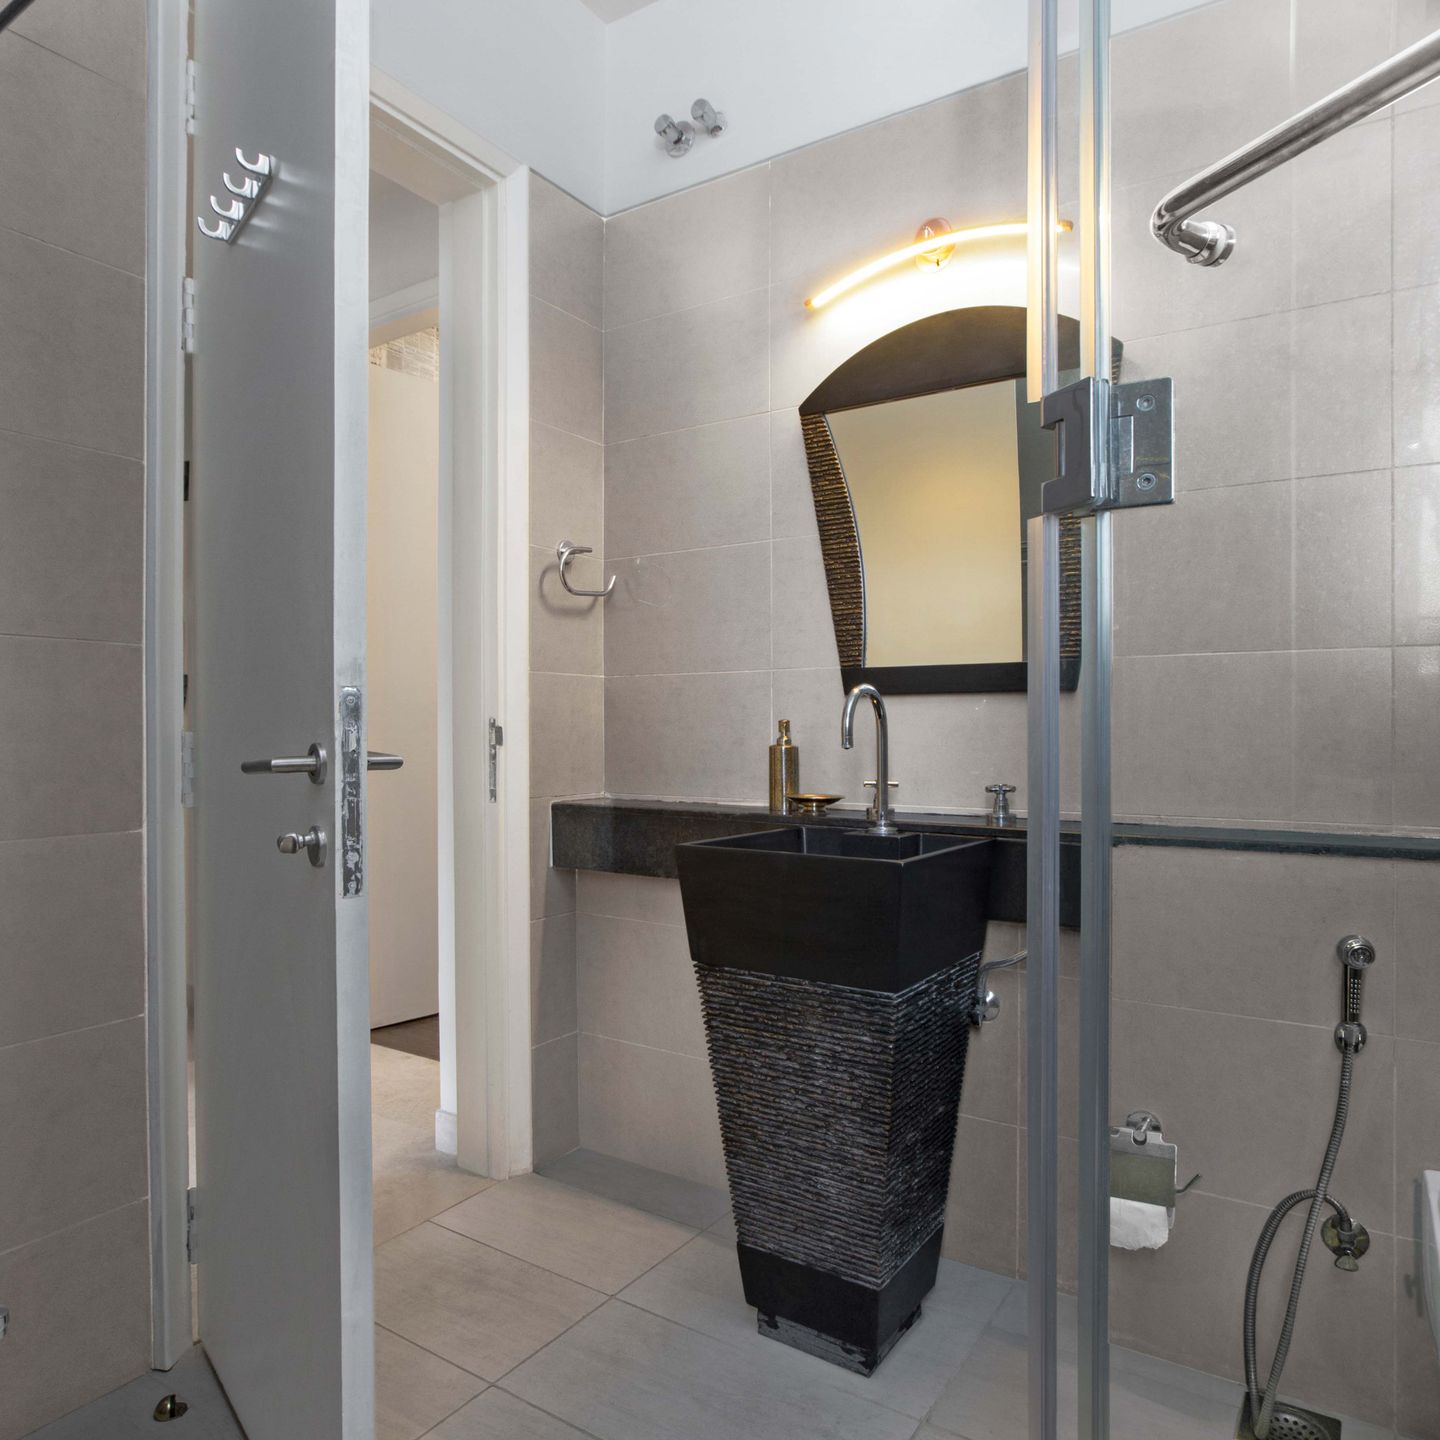 Compact Bathroom Design With Beige Tiles - Livspace